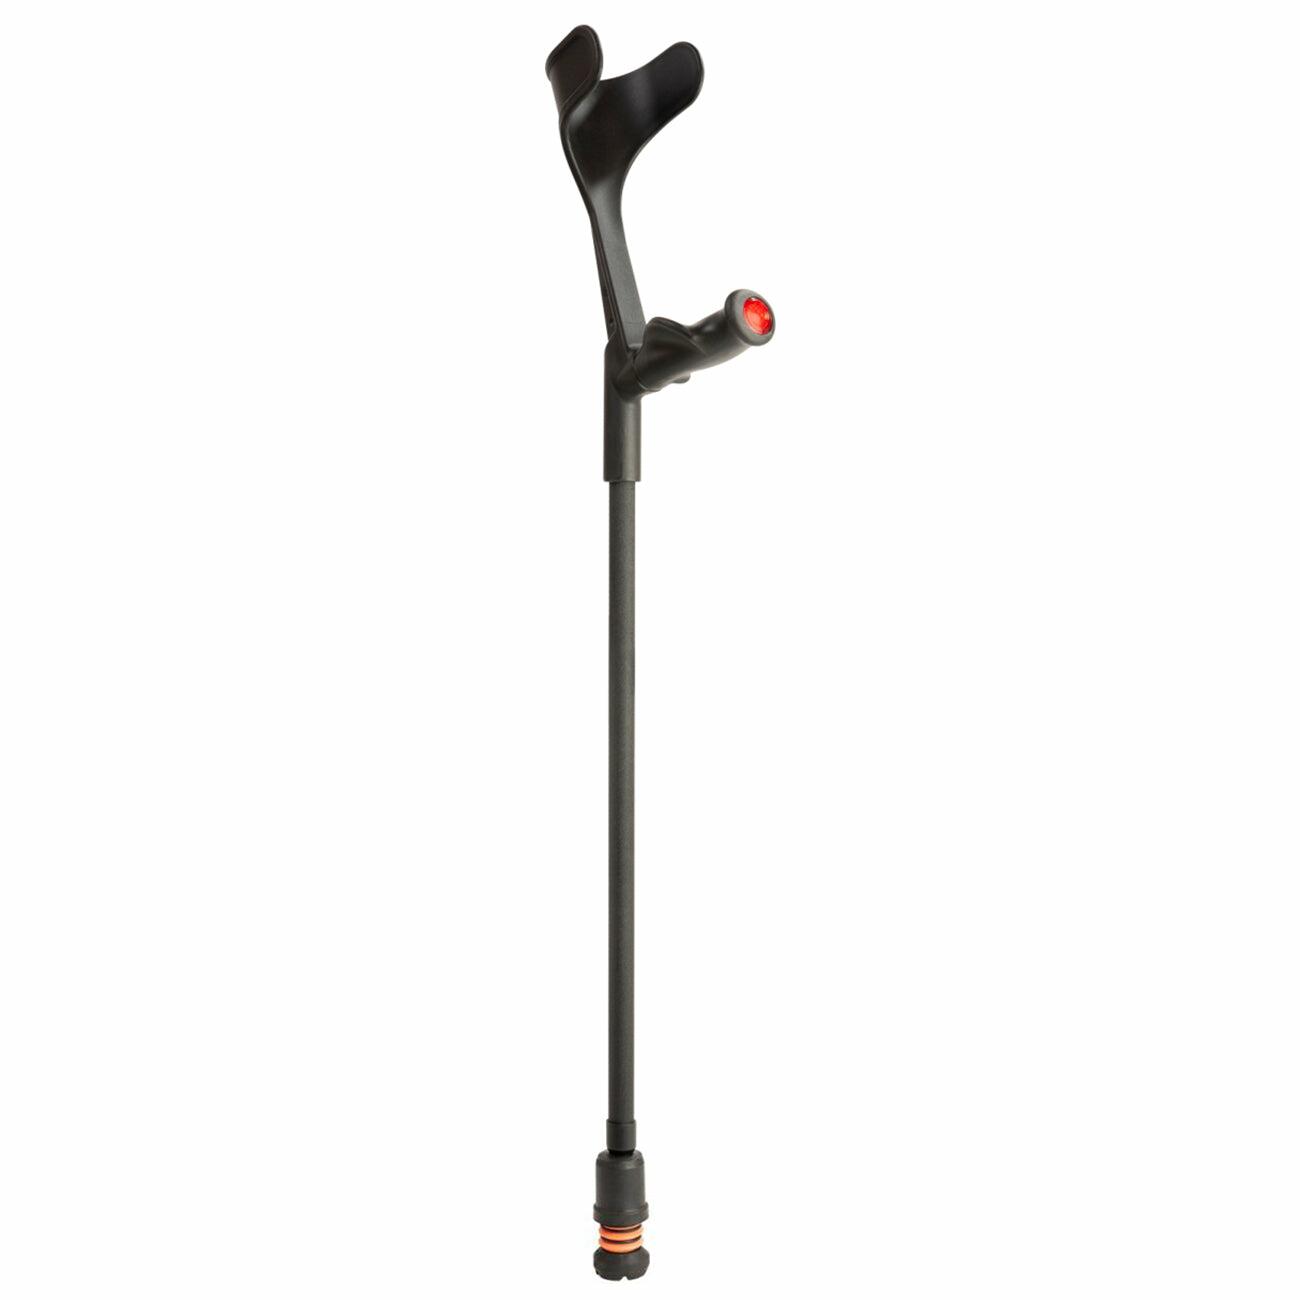 A single black Flexyfoot Comfort Grip Open Cuff Crutch